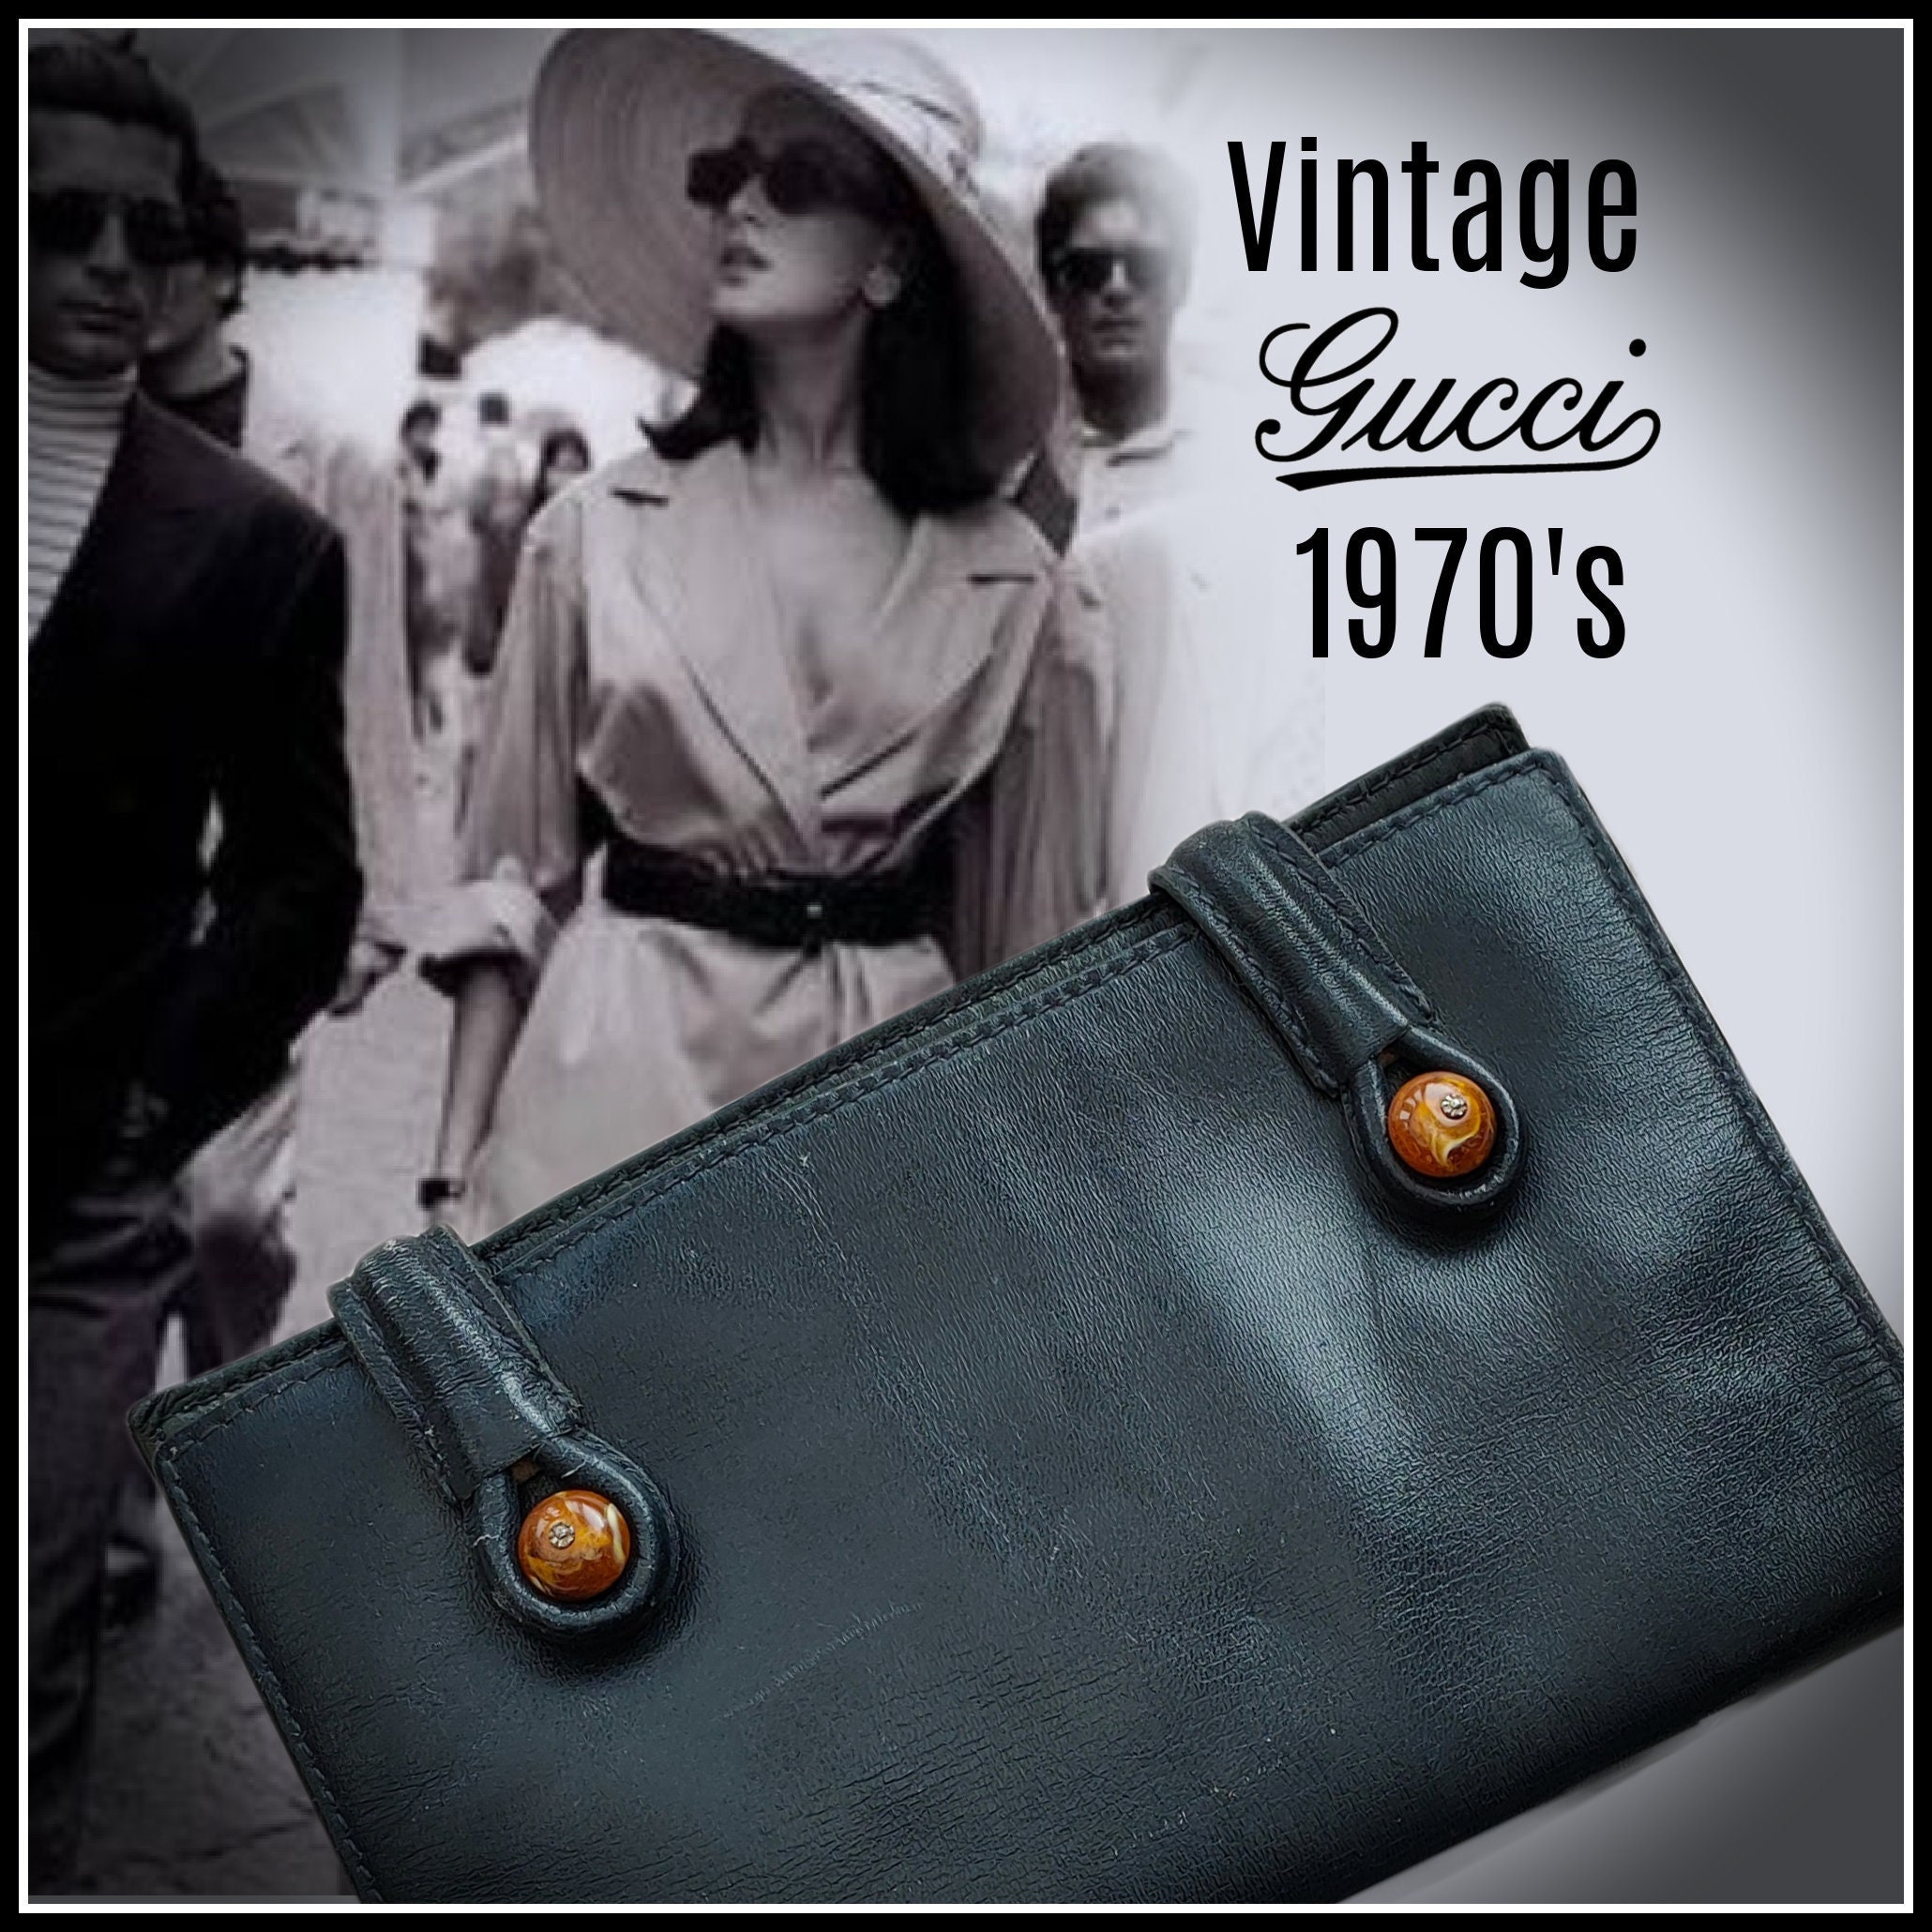 Vintage Gucci Leather Cigar Case - Mint Condition